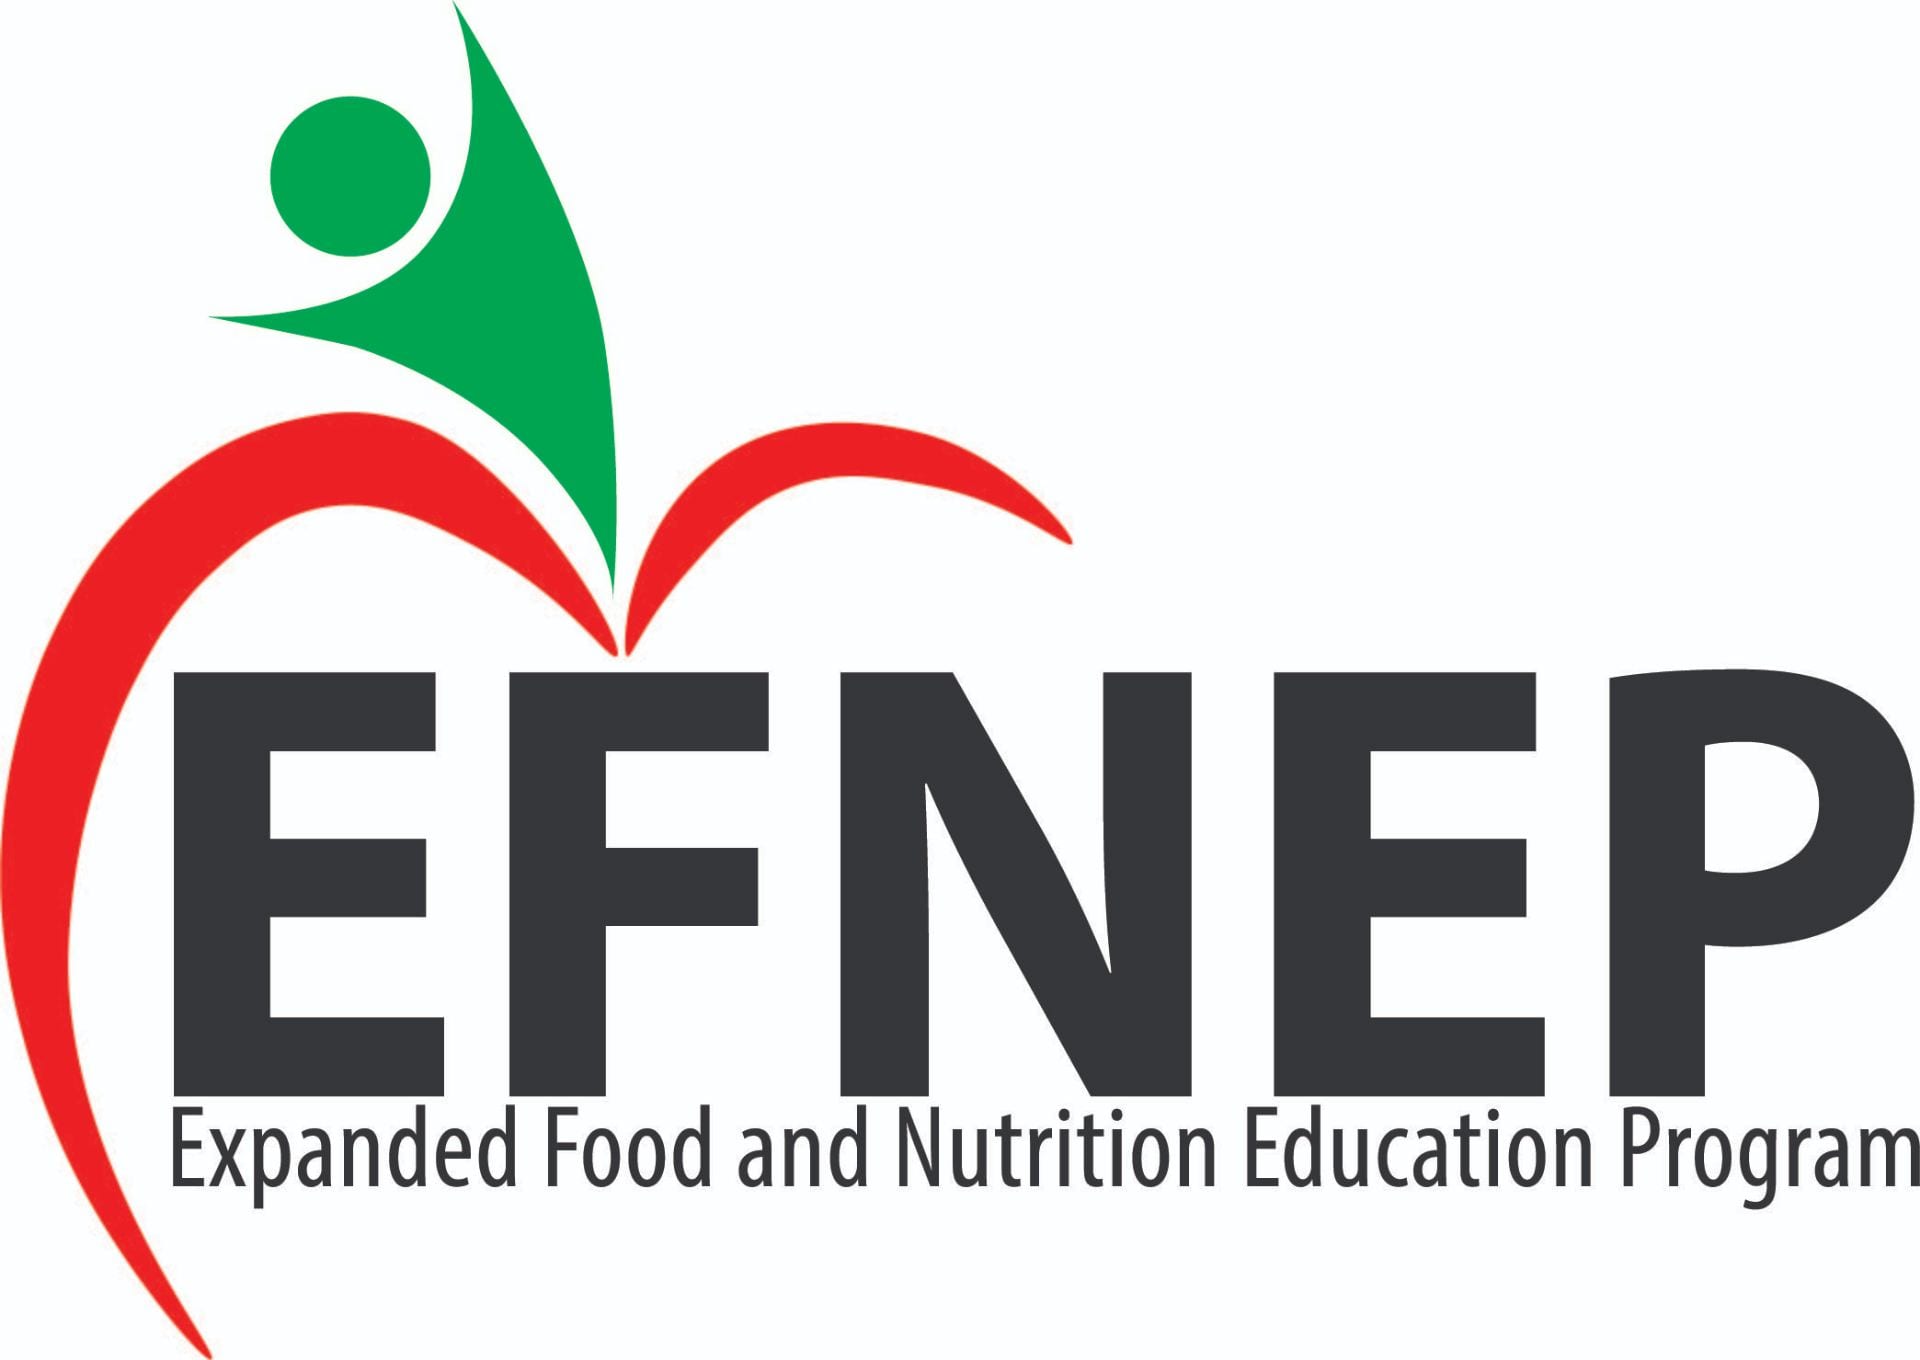 EFNEP (Expanded Food and Nutrition Education Program) logo